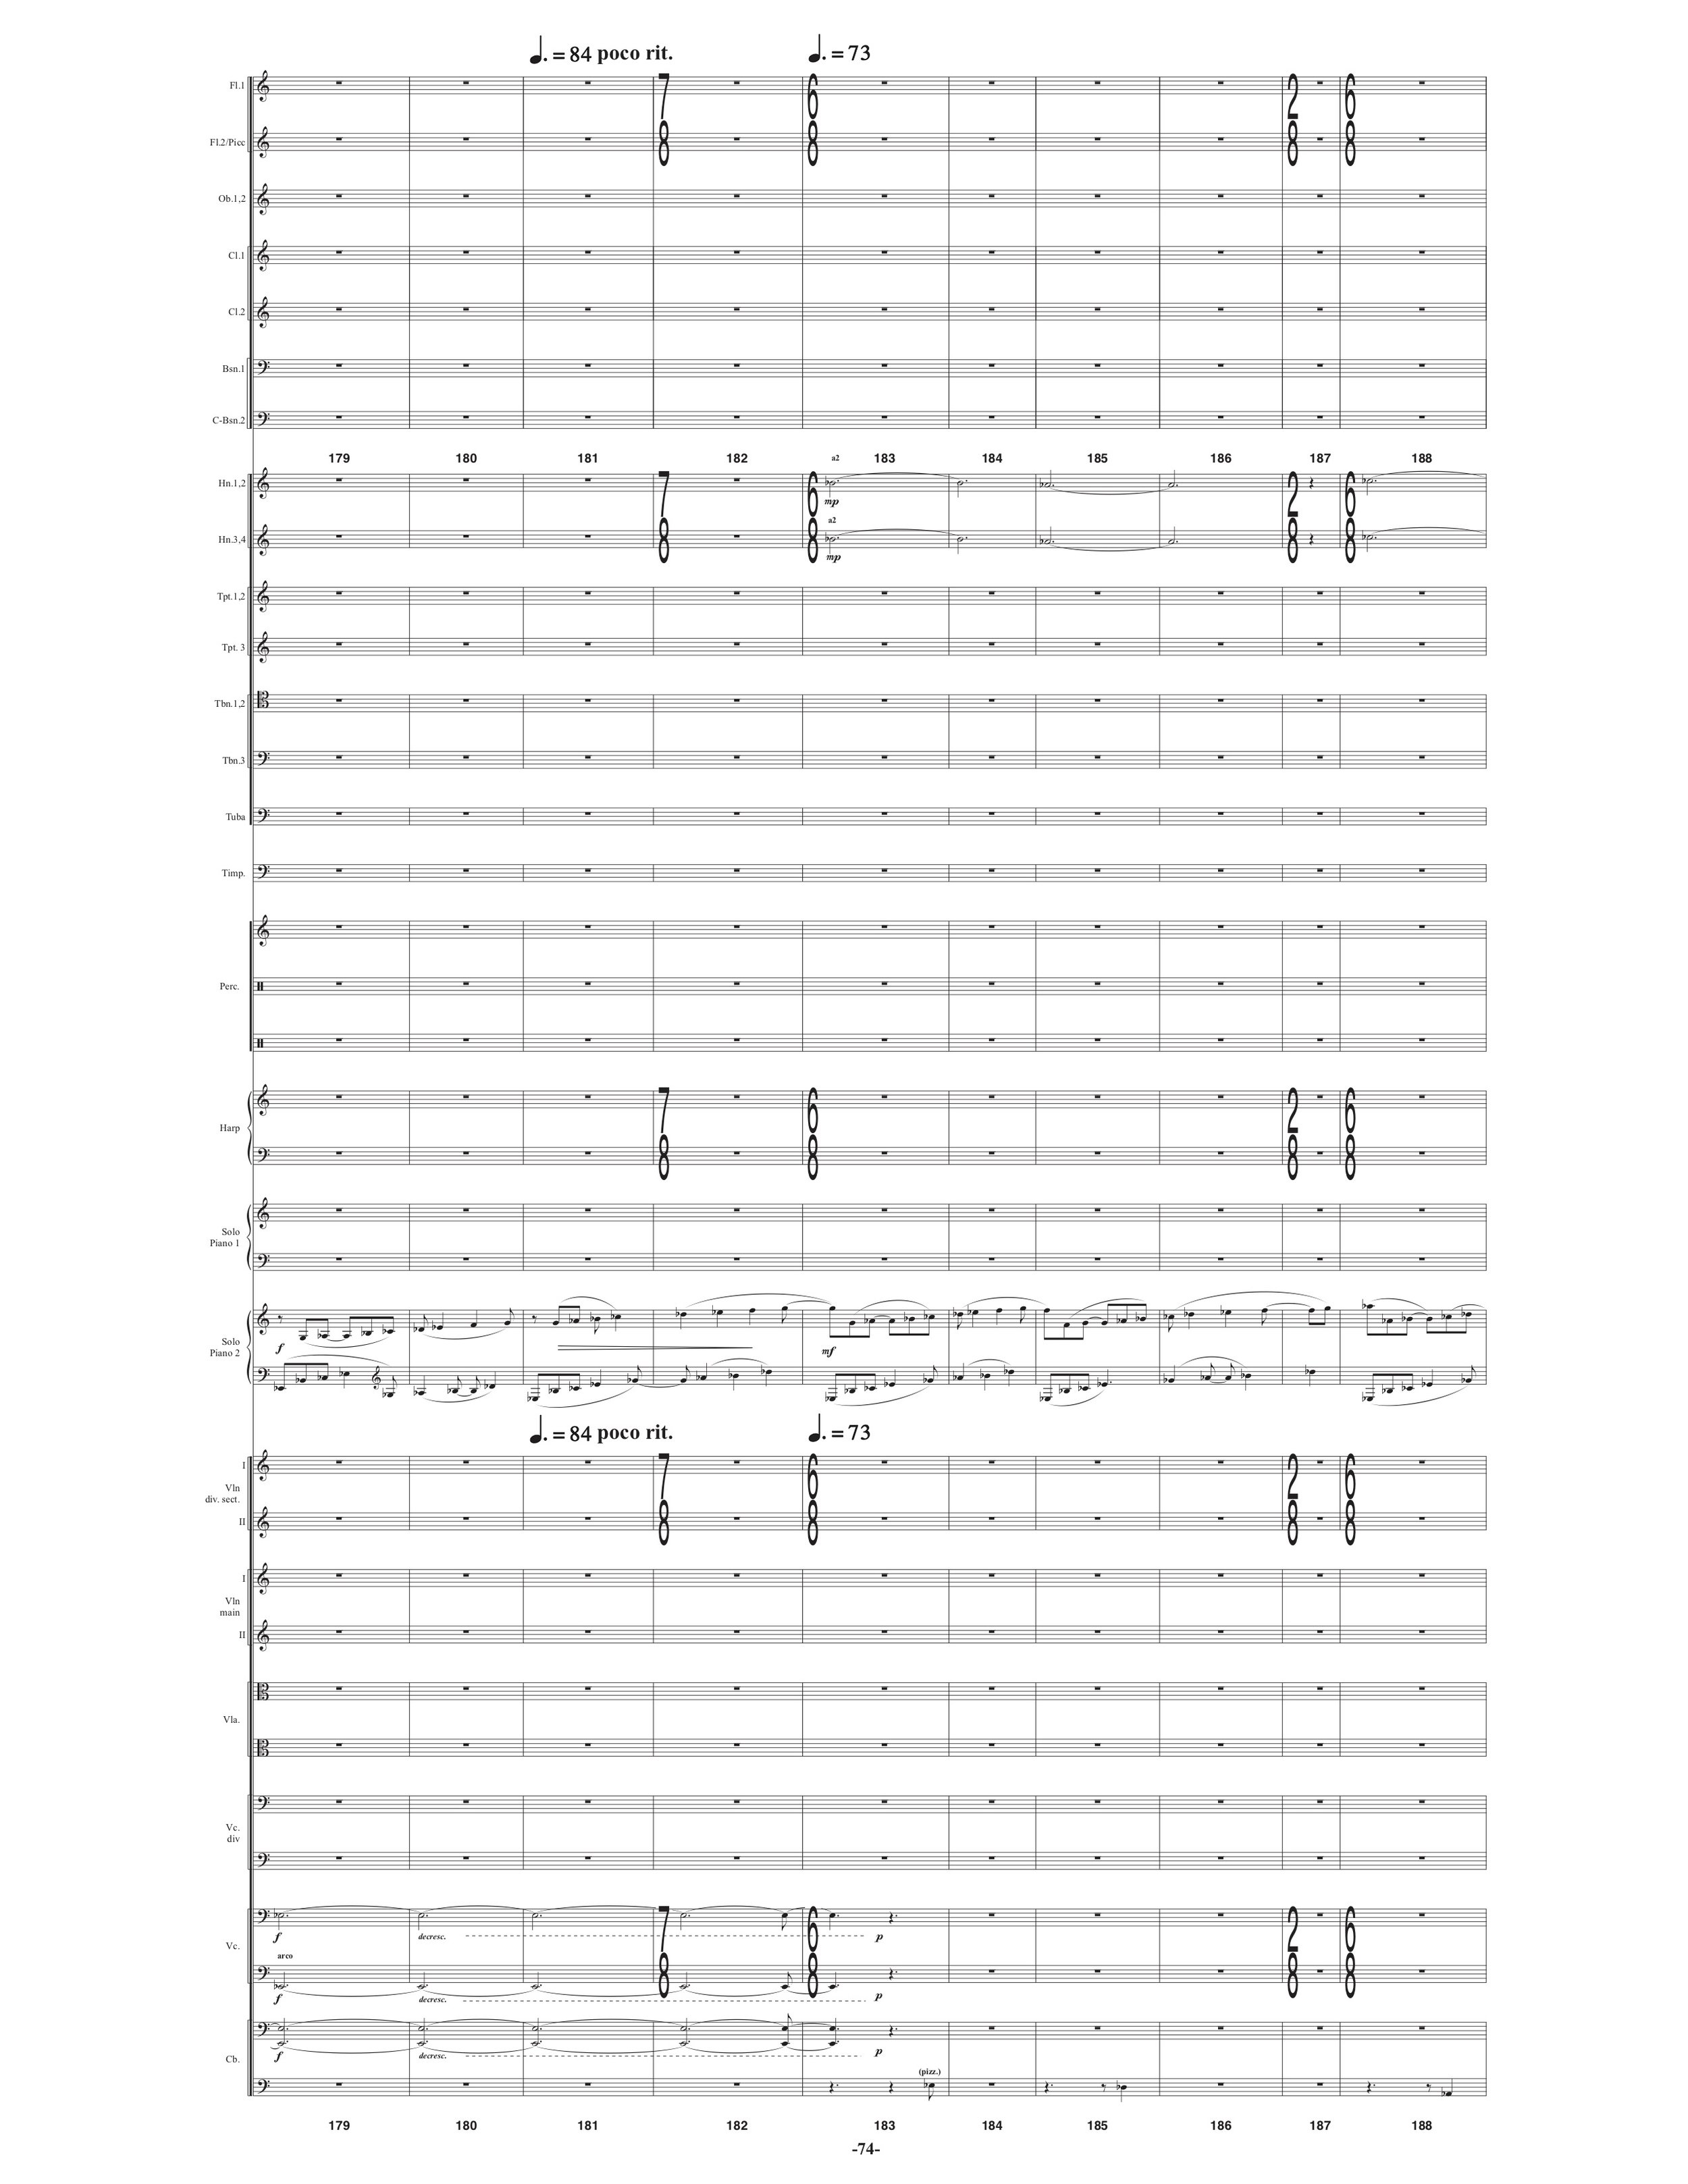 Symphony_Orch & 2 Pianos p79.jpg